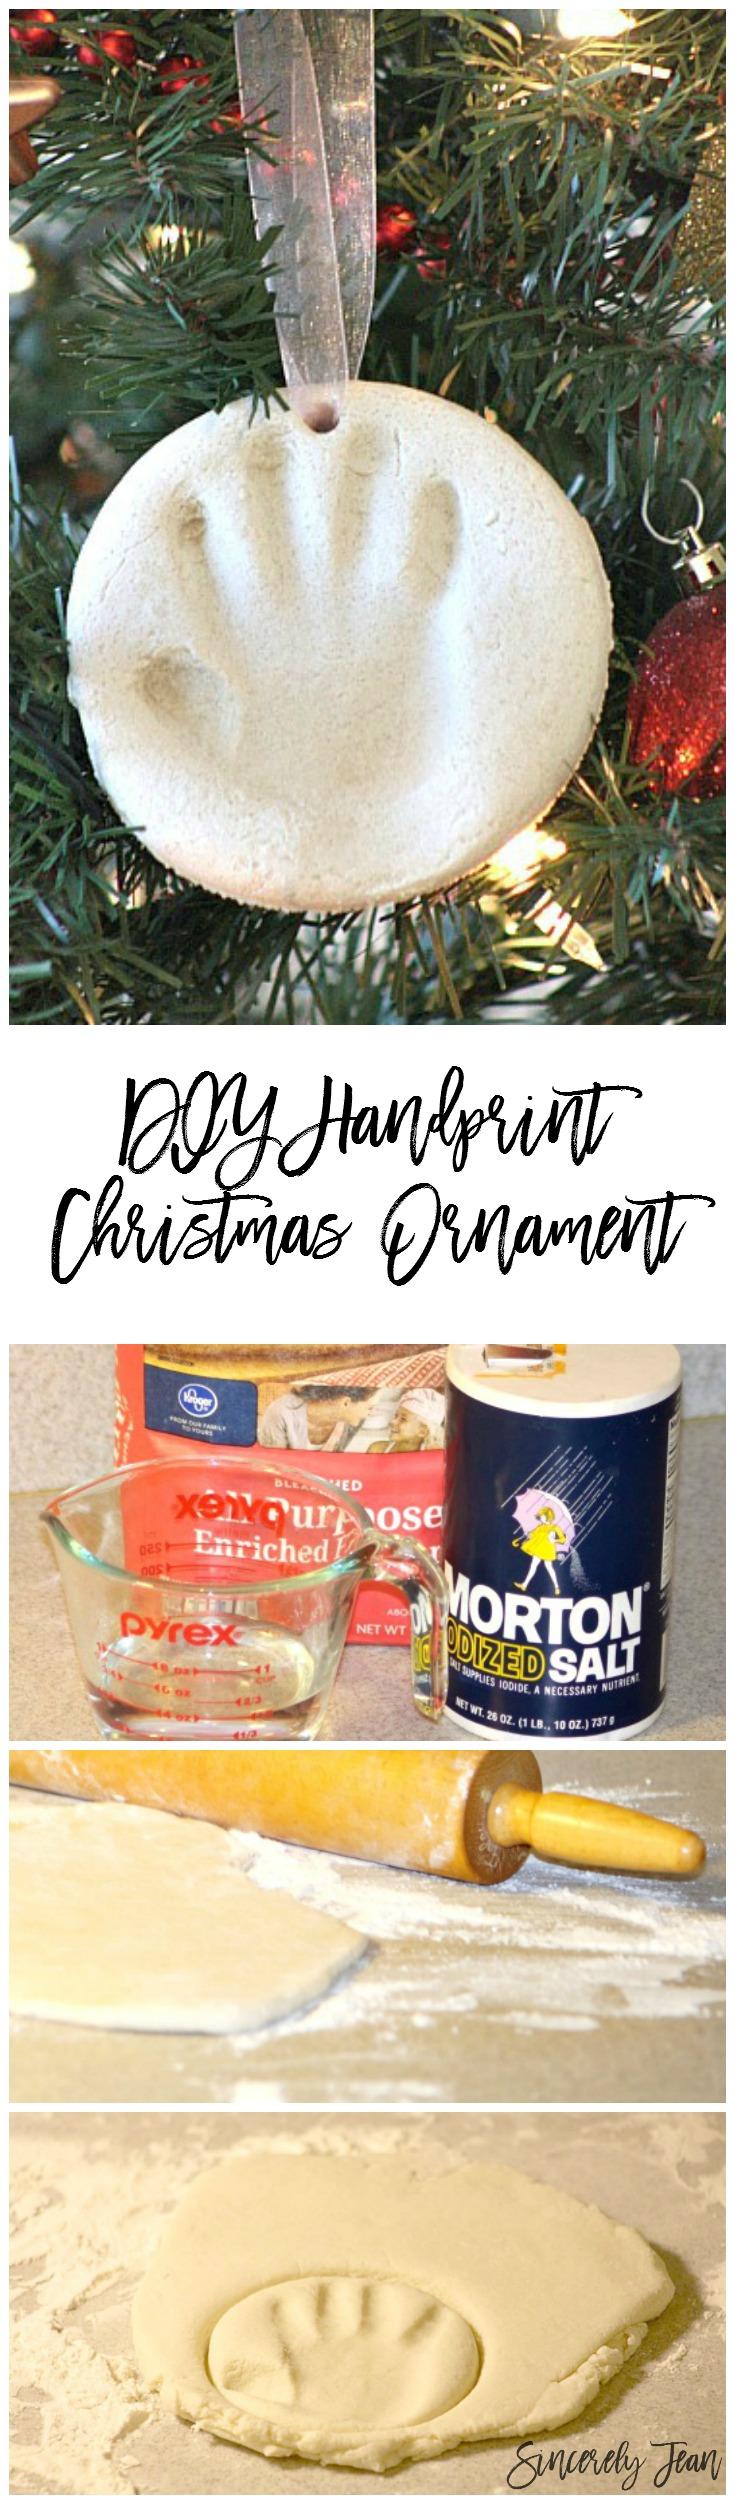 DIY Handprint Christmas Ornament - Simple Christmas craft for children! Make memories in an ornament! | www.SincerelyJean.com